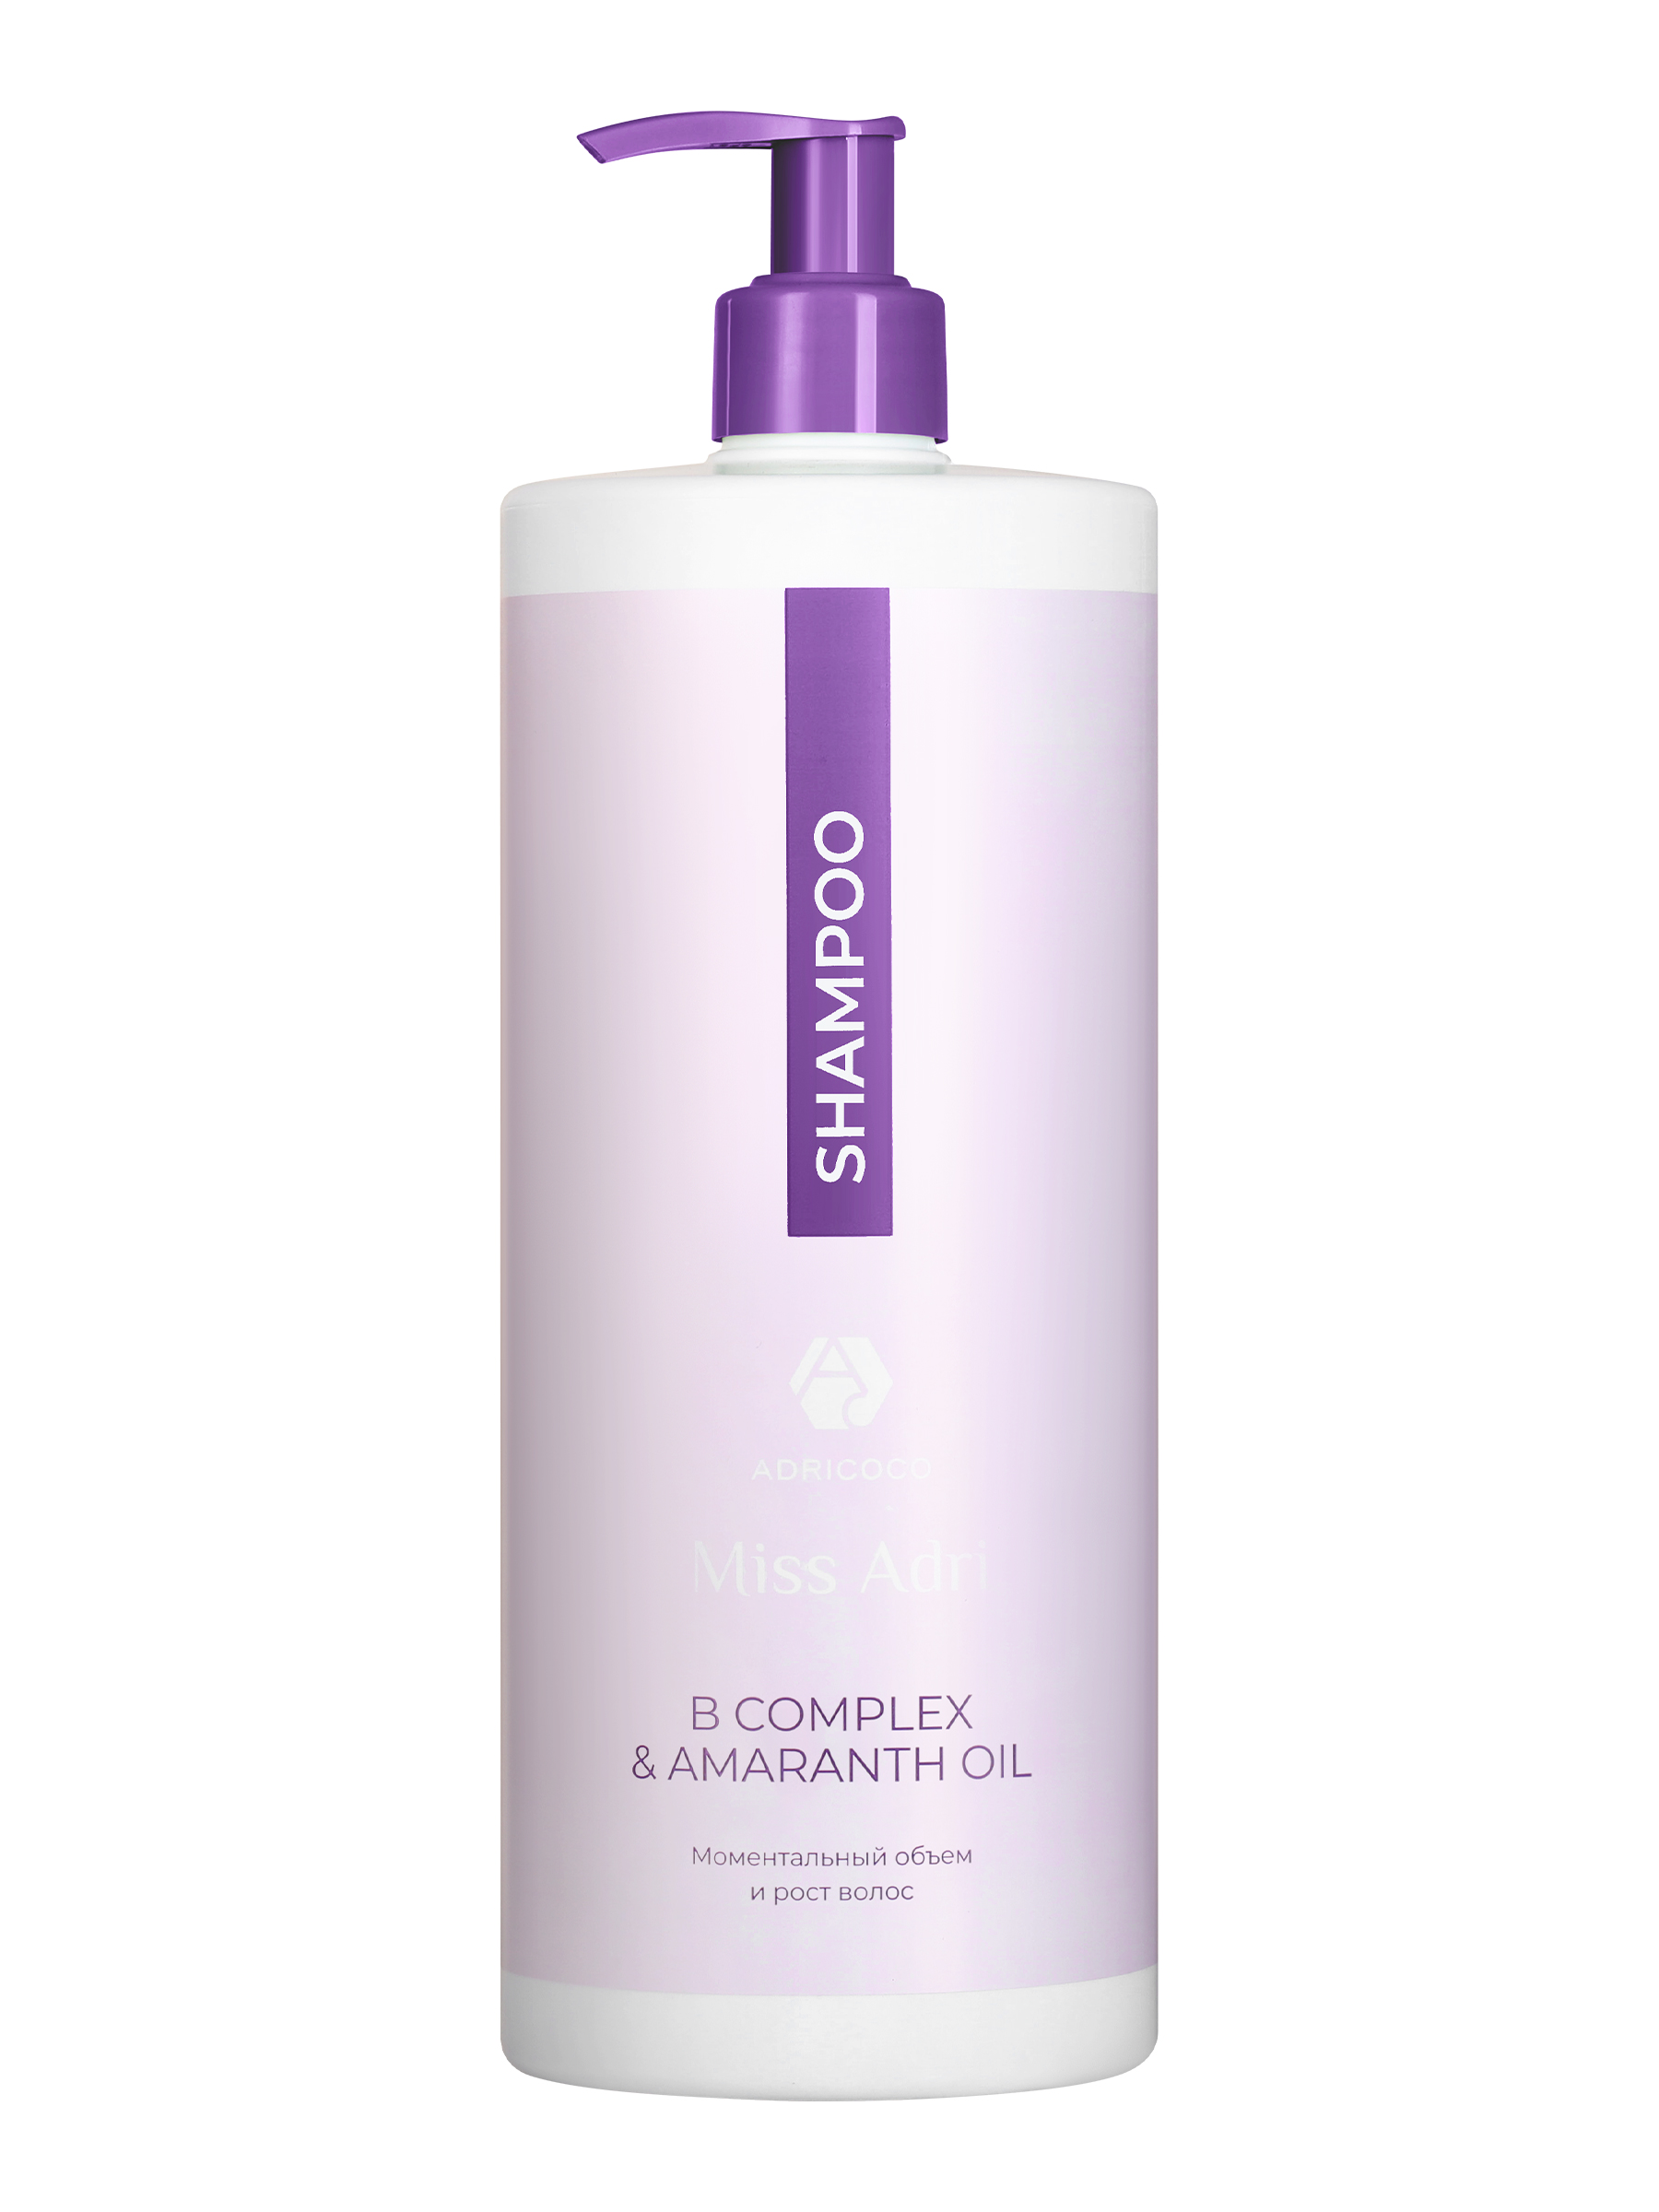 Шампунь для волос ADRICOCO Miss Adri B Complex & Amaranth Oil для объема, 1 л